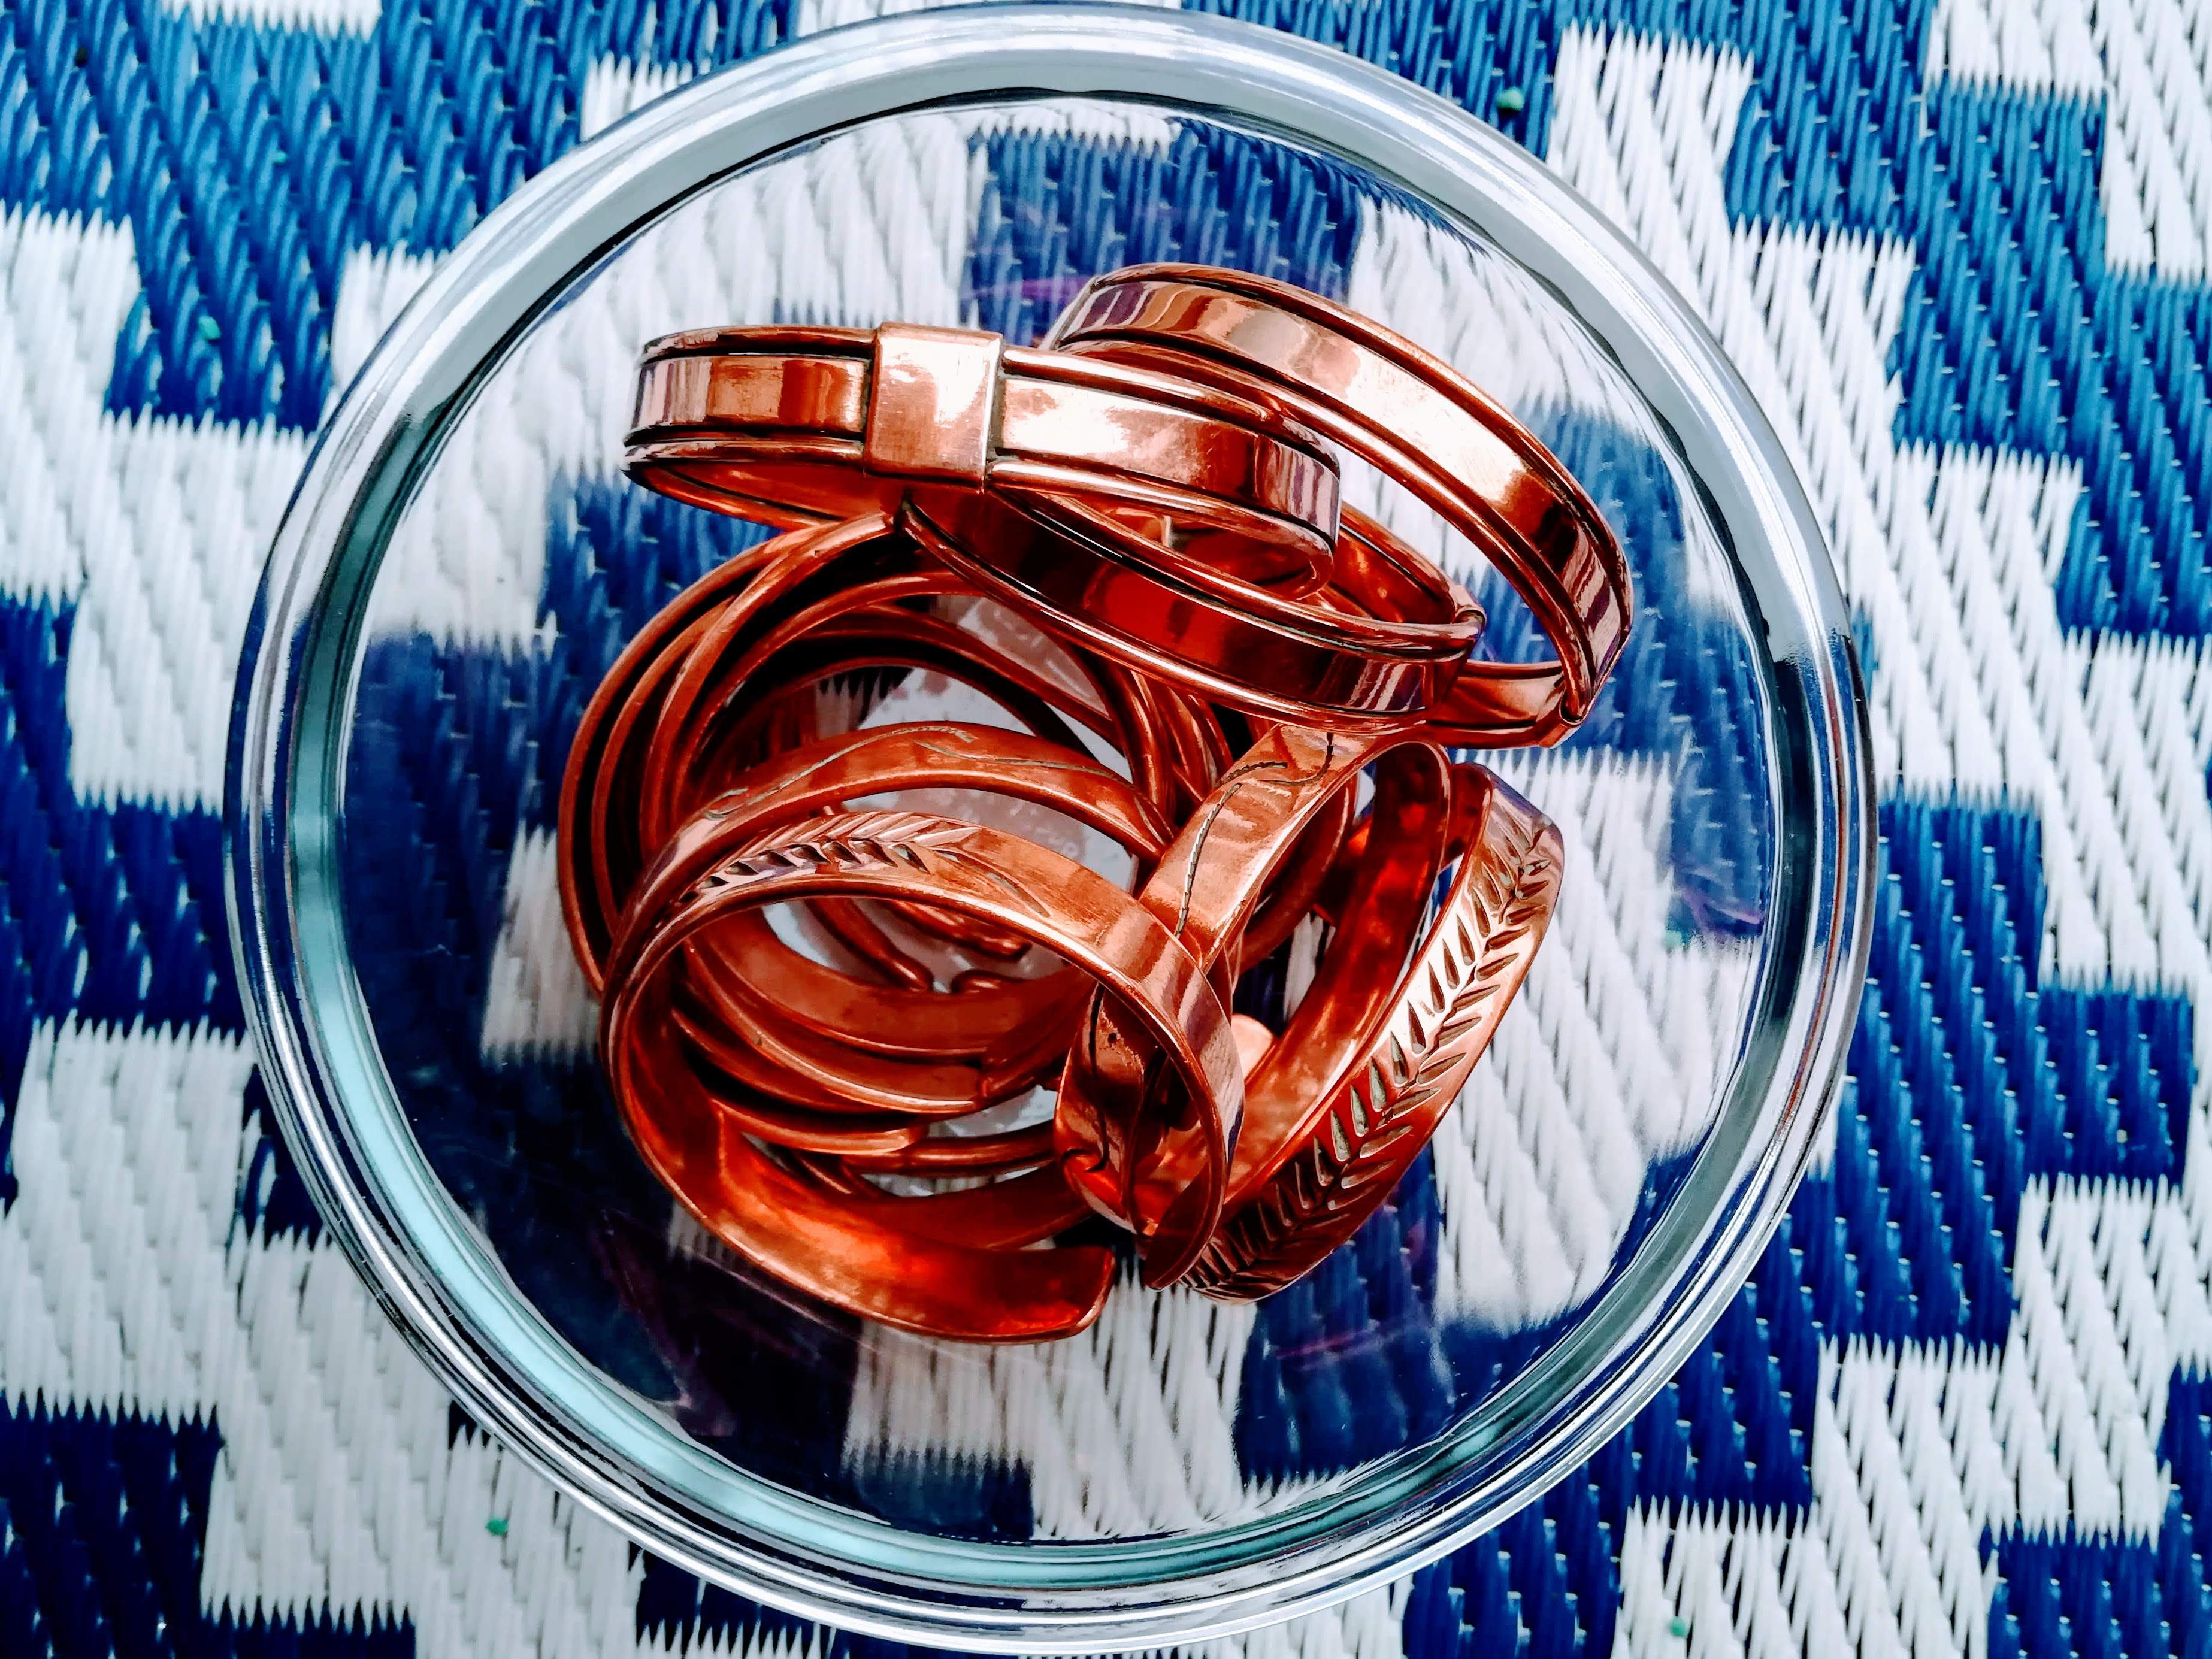 Authentic Zambian Copper Bracelet